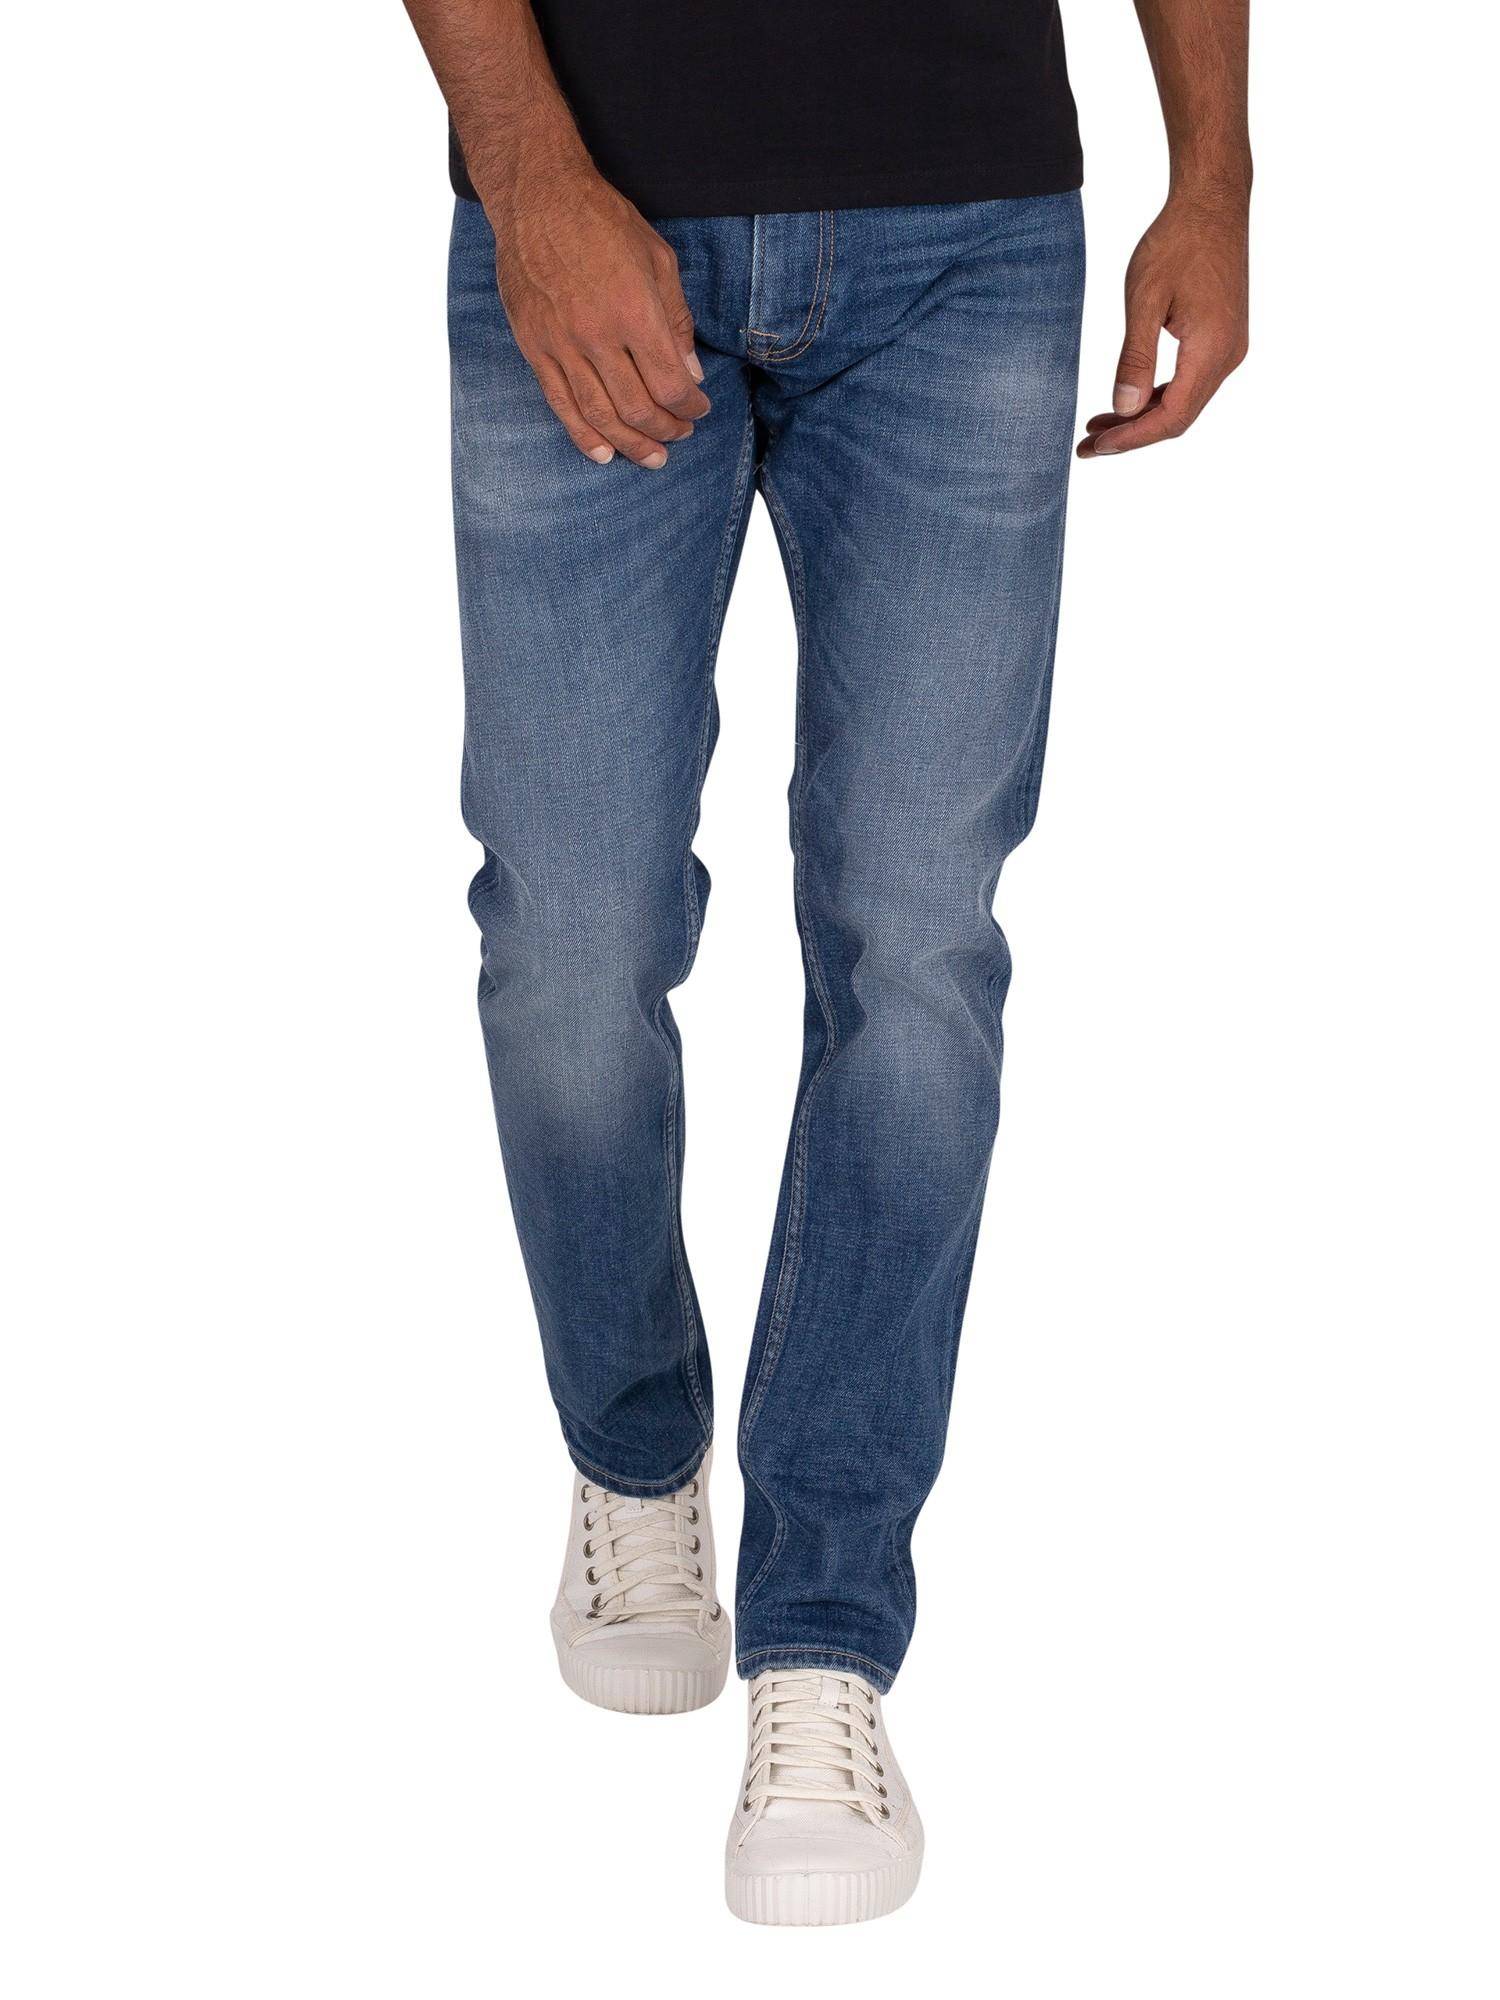 Replay Denim Rocco Comfort Jeans in Deep Blue Indigo (Blue) for Men - Lyst